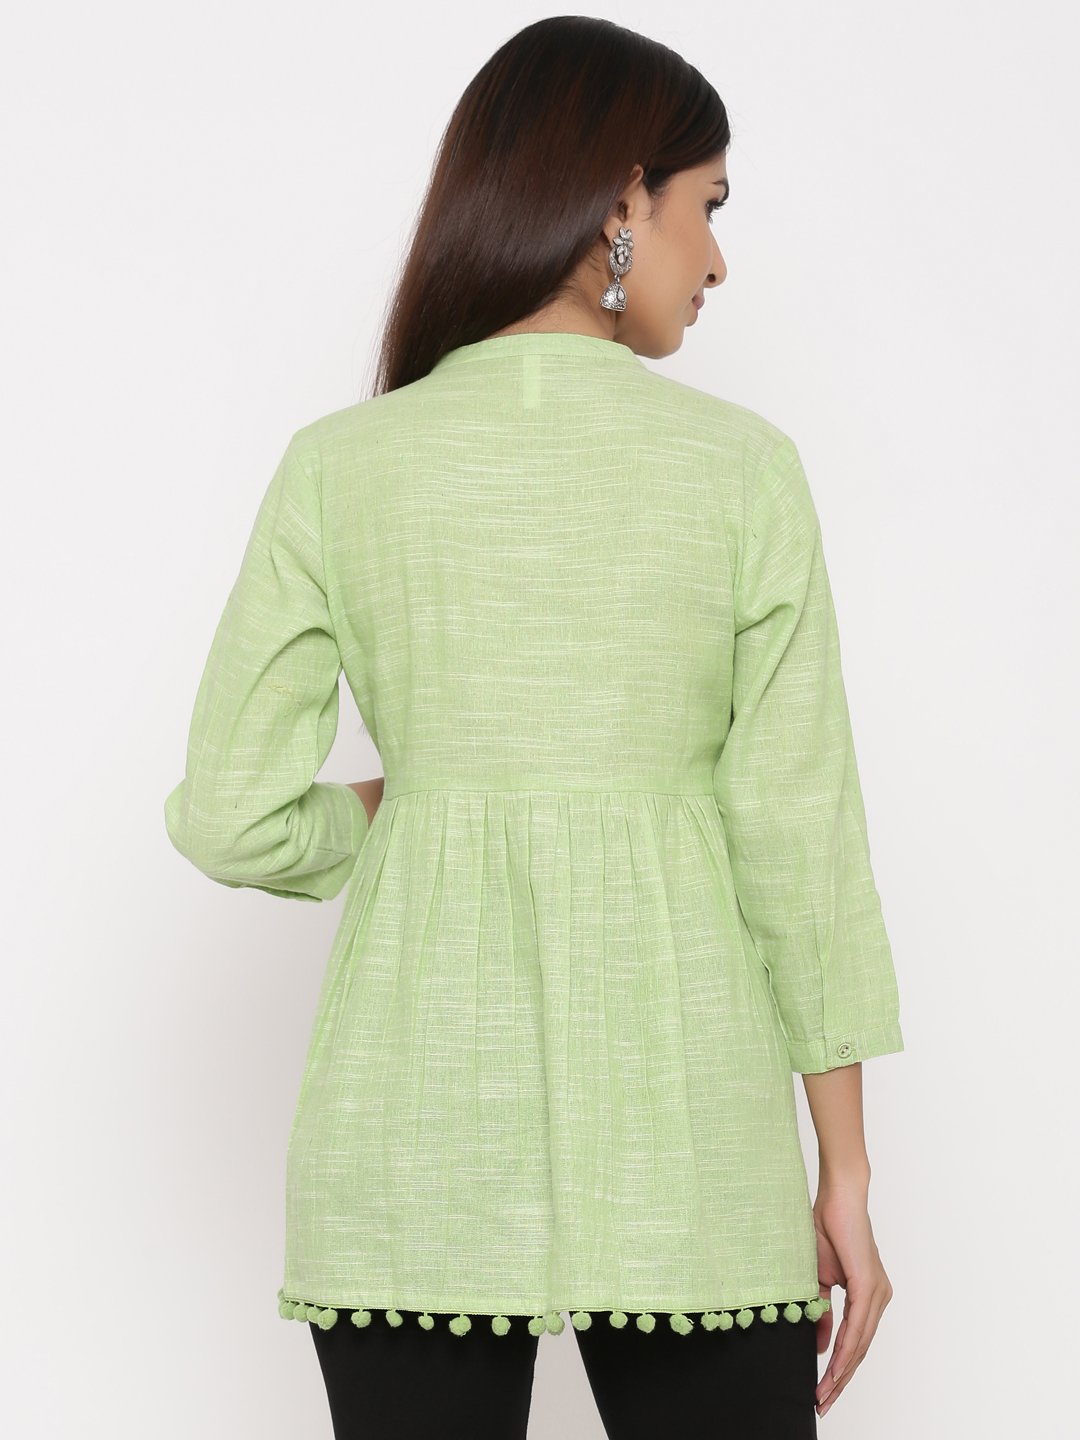 Women's Light Green Cotton Tunic by Kipek (1pc)